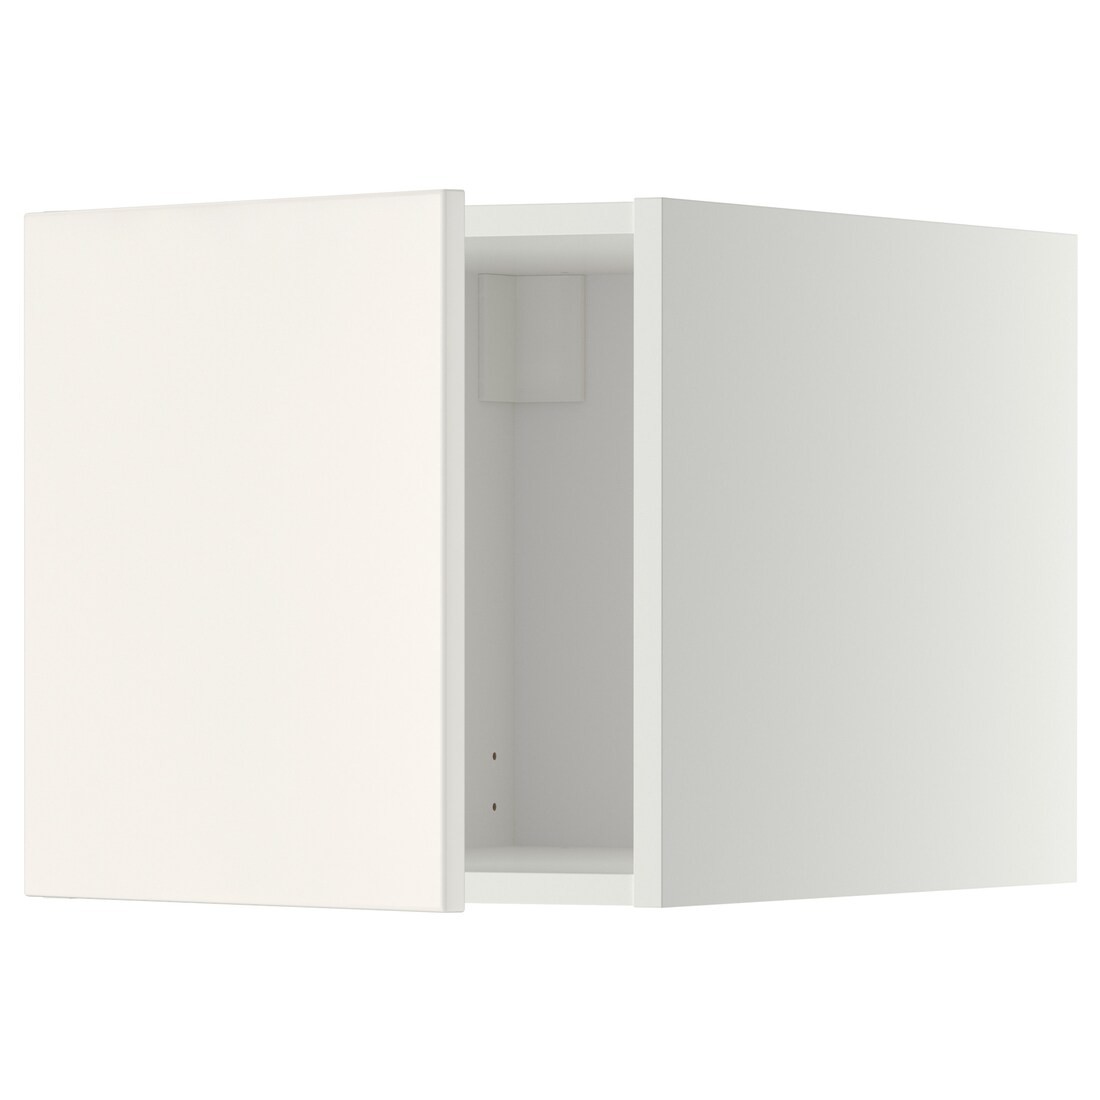 IKEA METOD МЕТОД Надставка, белый / Veddinge белый, 40x40 см 59454254 594.542.54